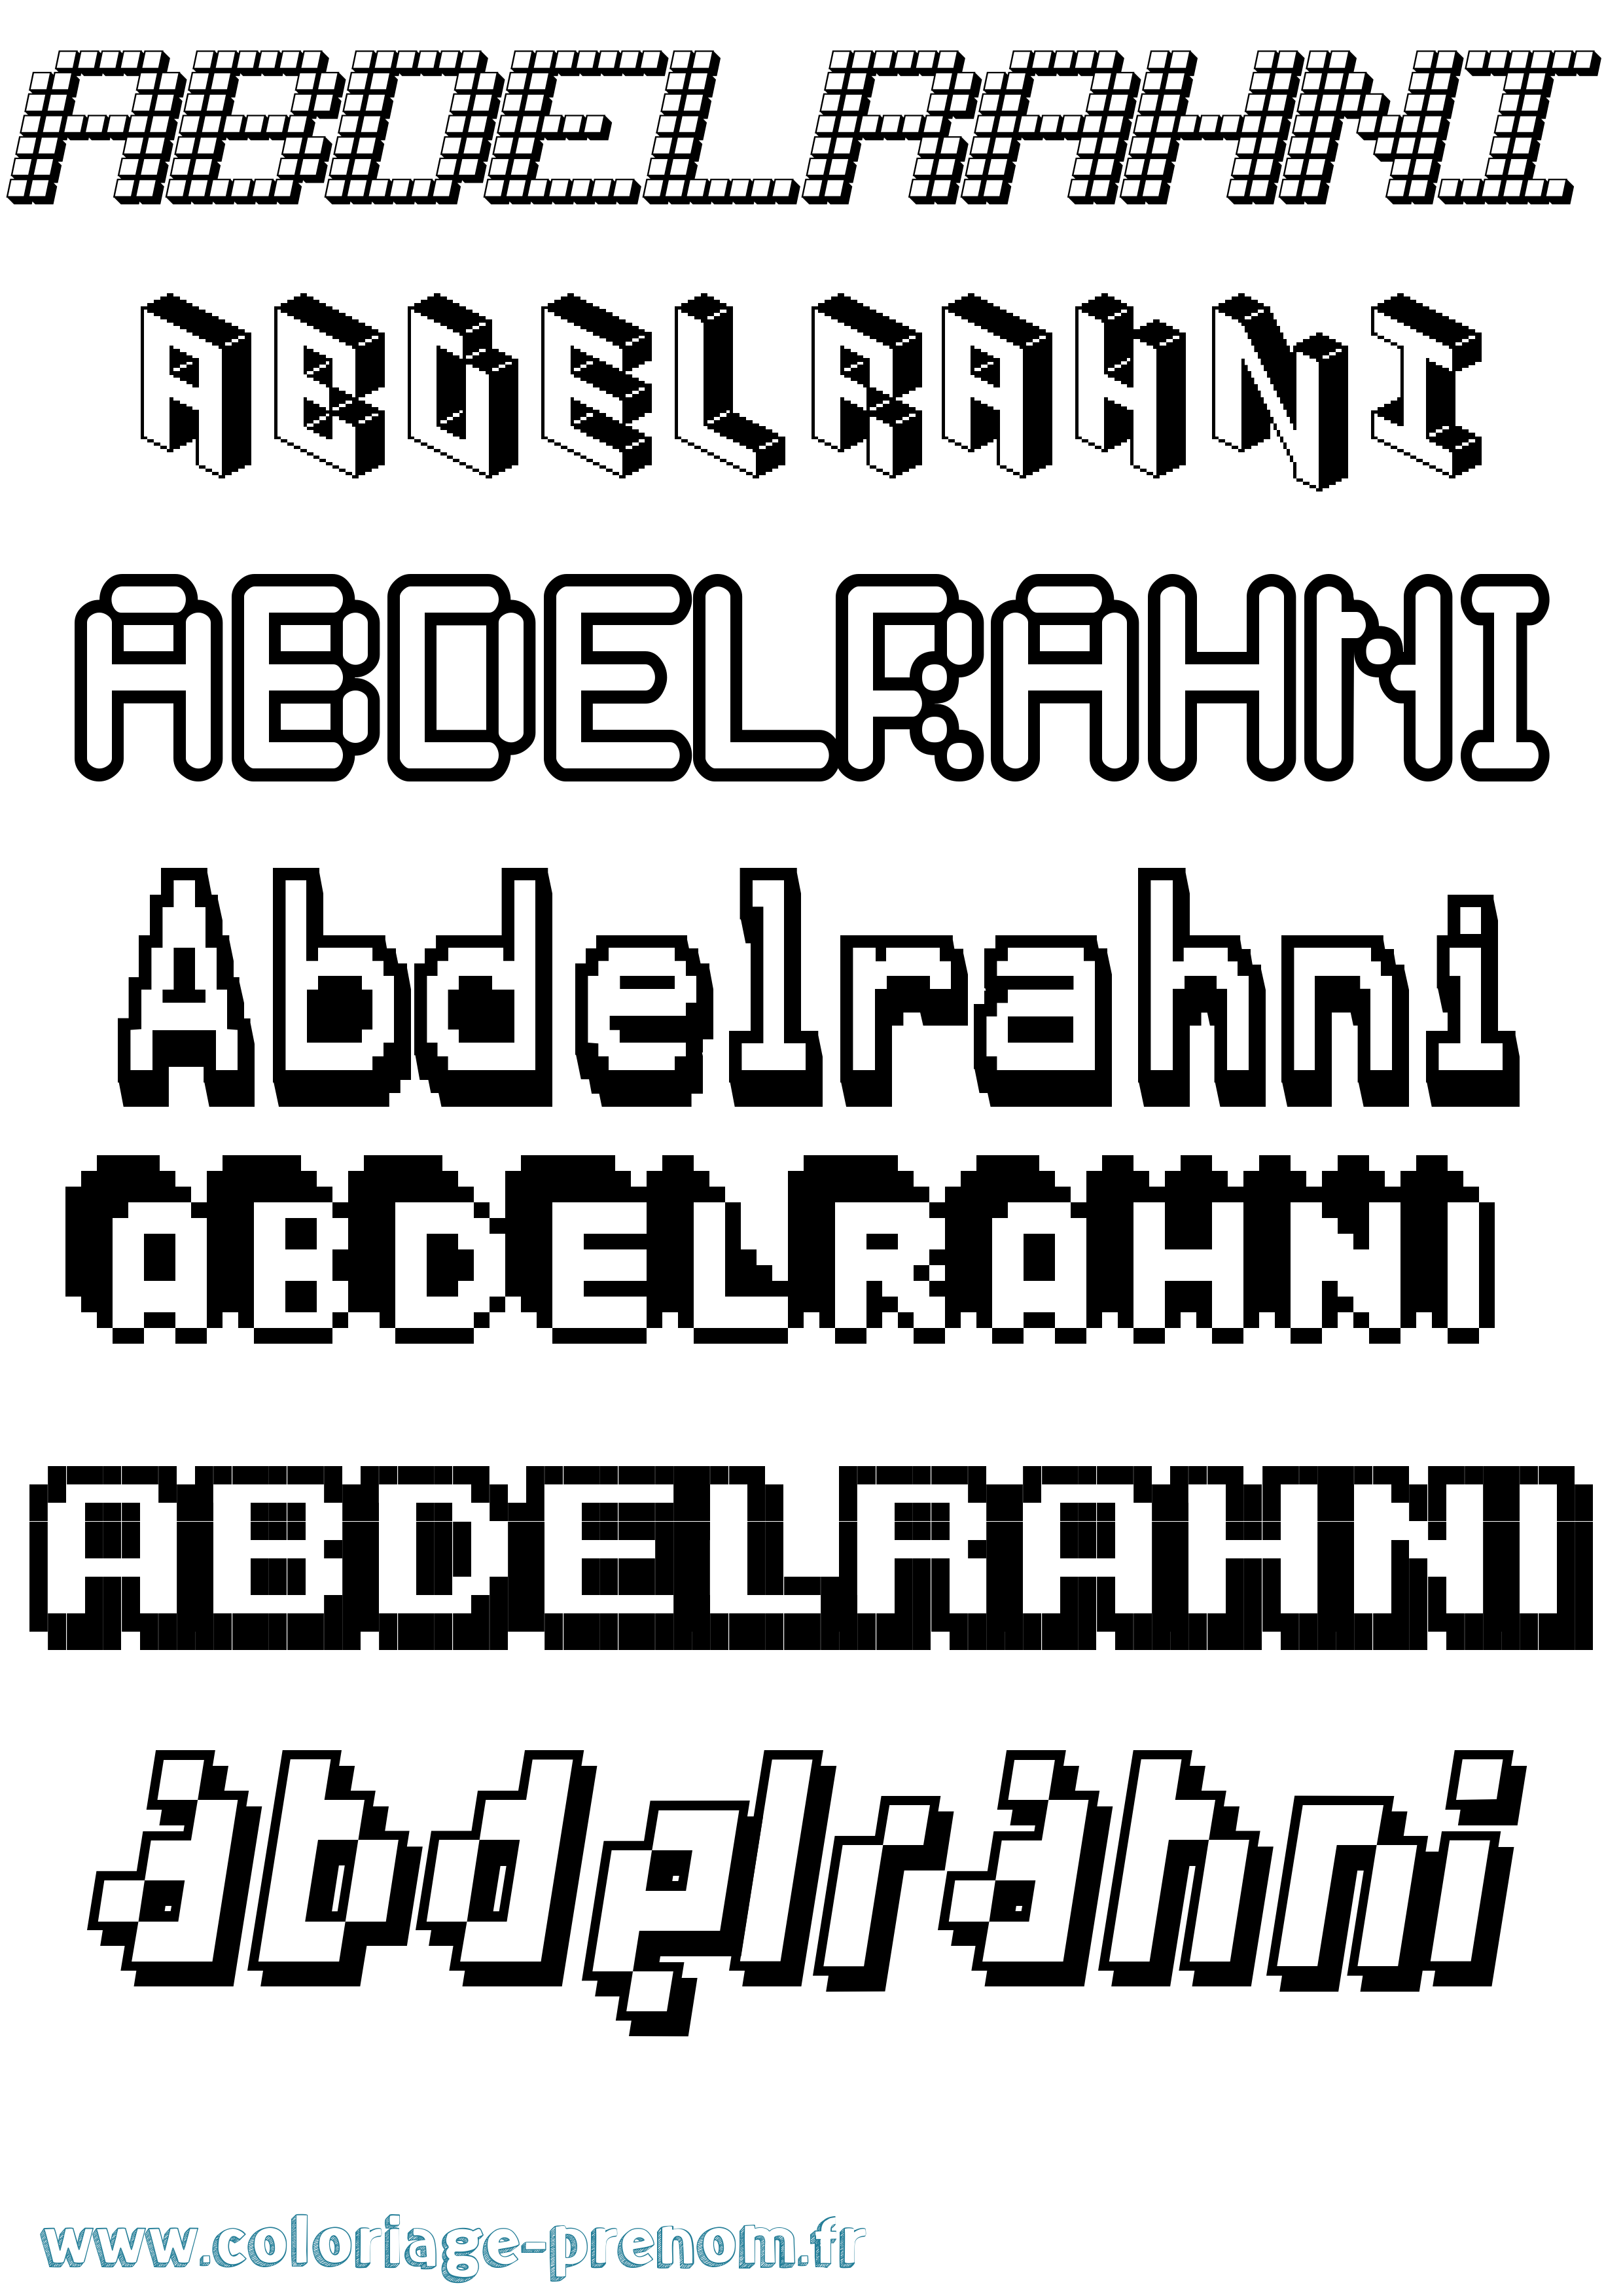 Coloriage prénom Abdelrahni Pixel